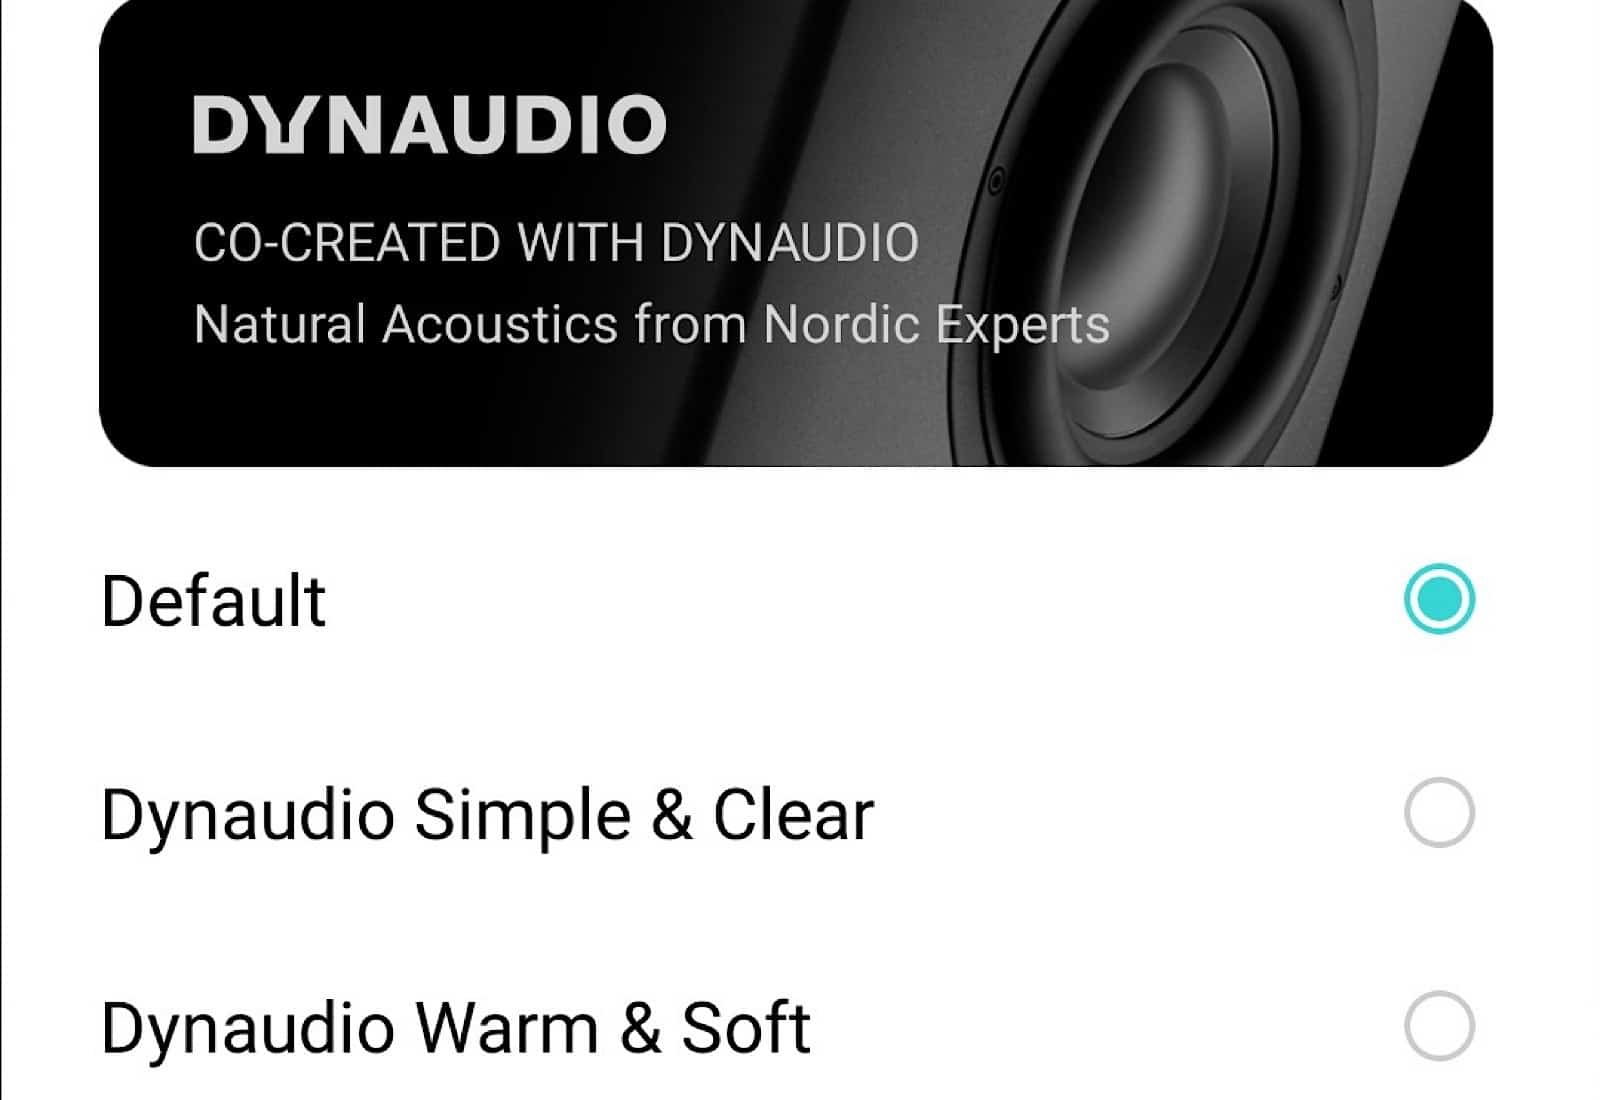 Oppo and Dynaudio's custom EQ settings